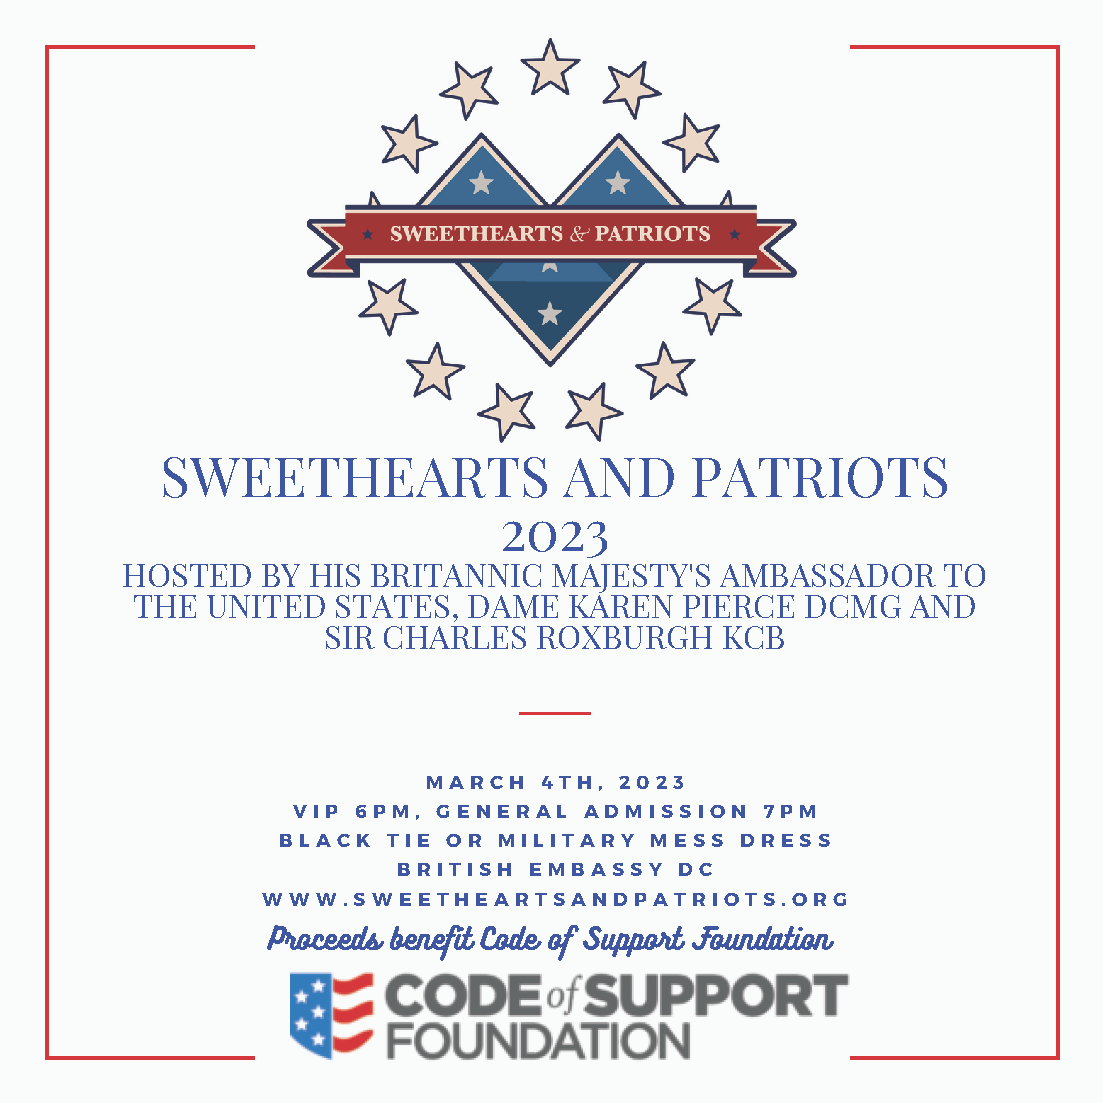 Sweethearts and Patriots 2023